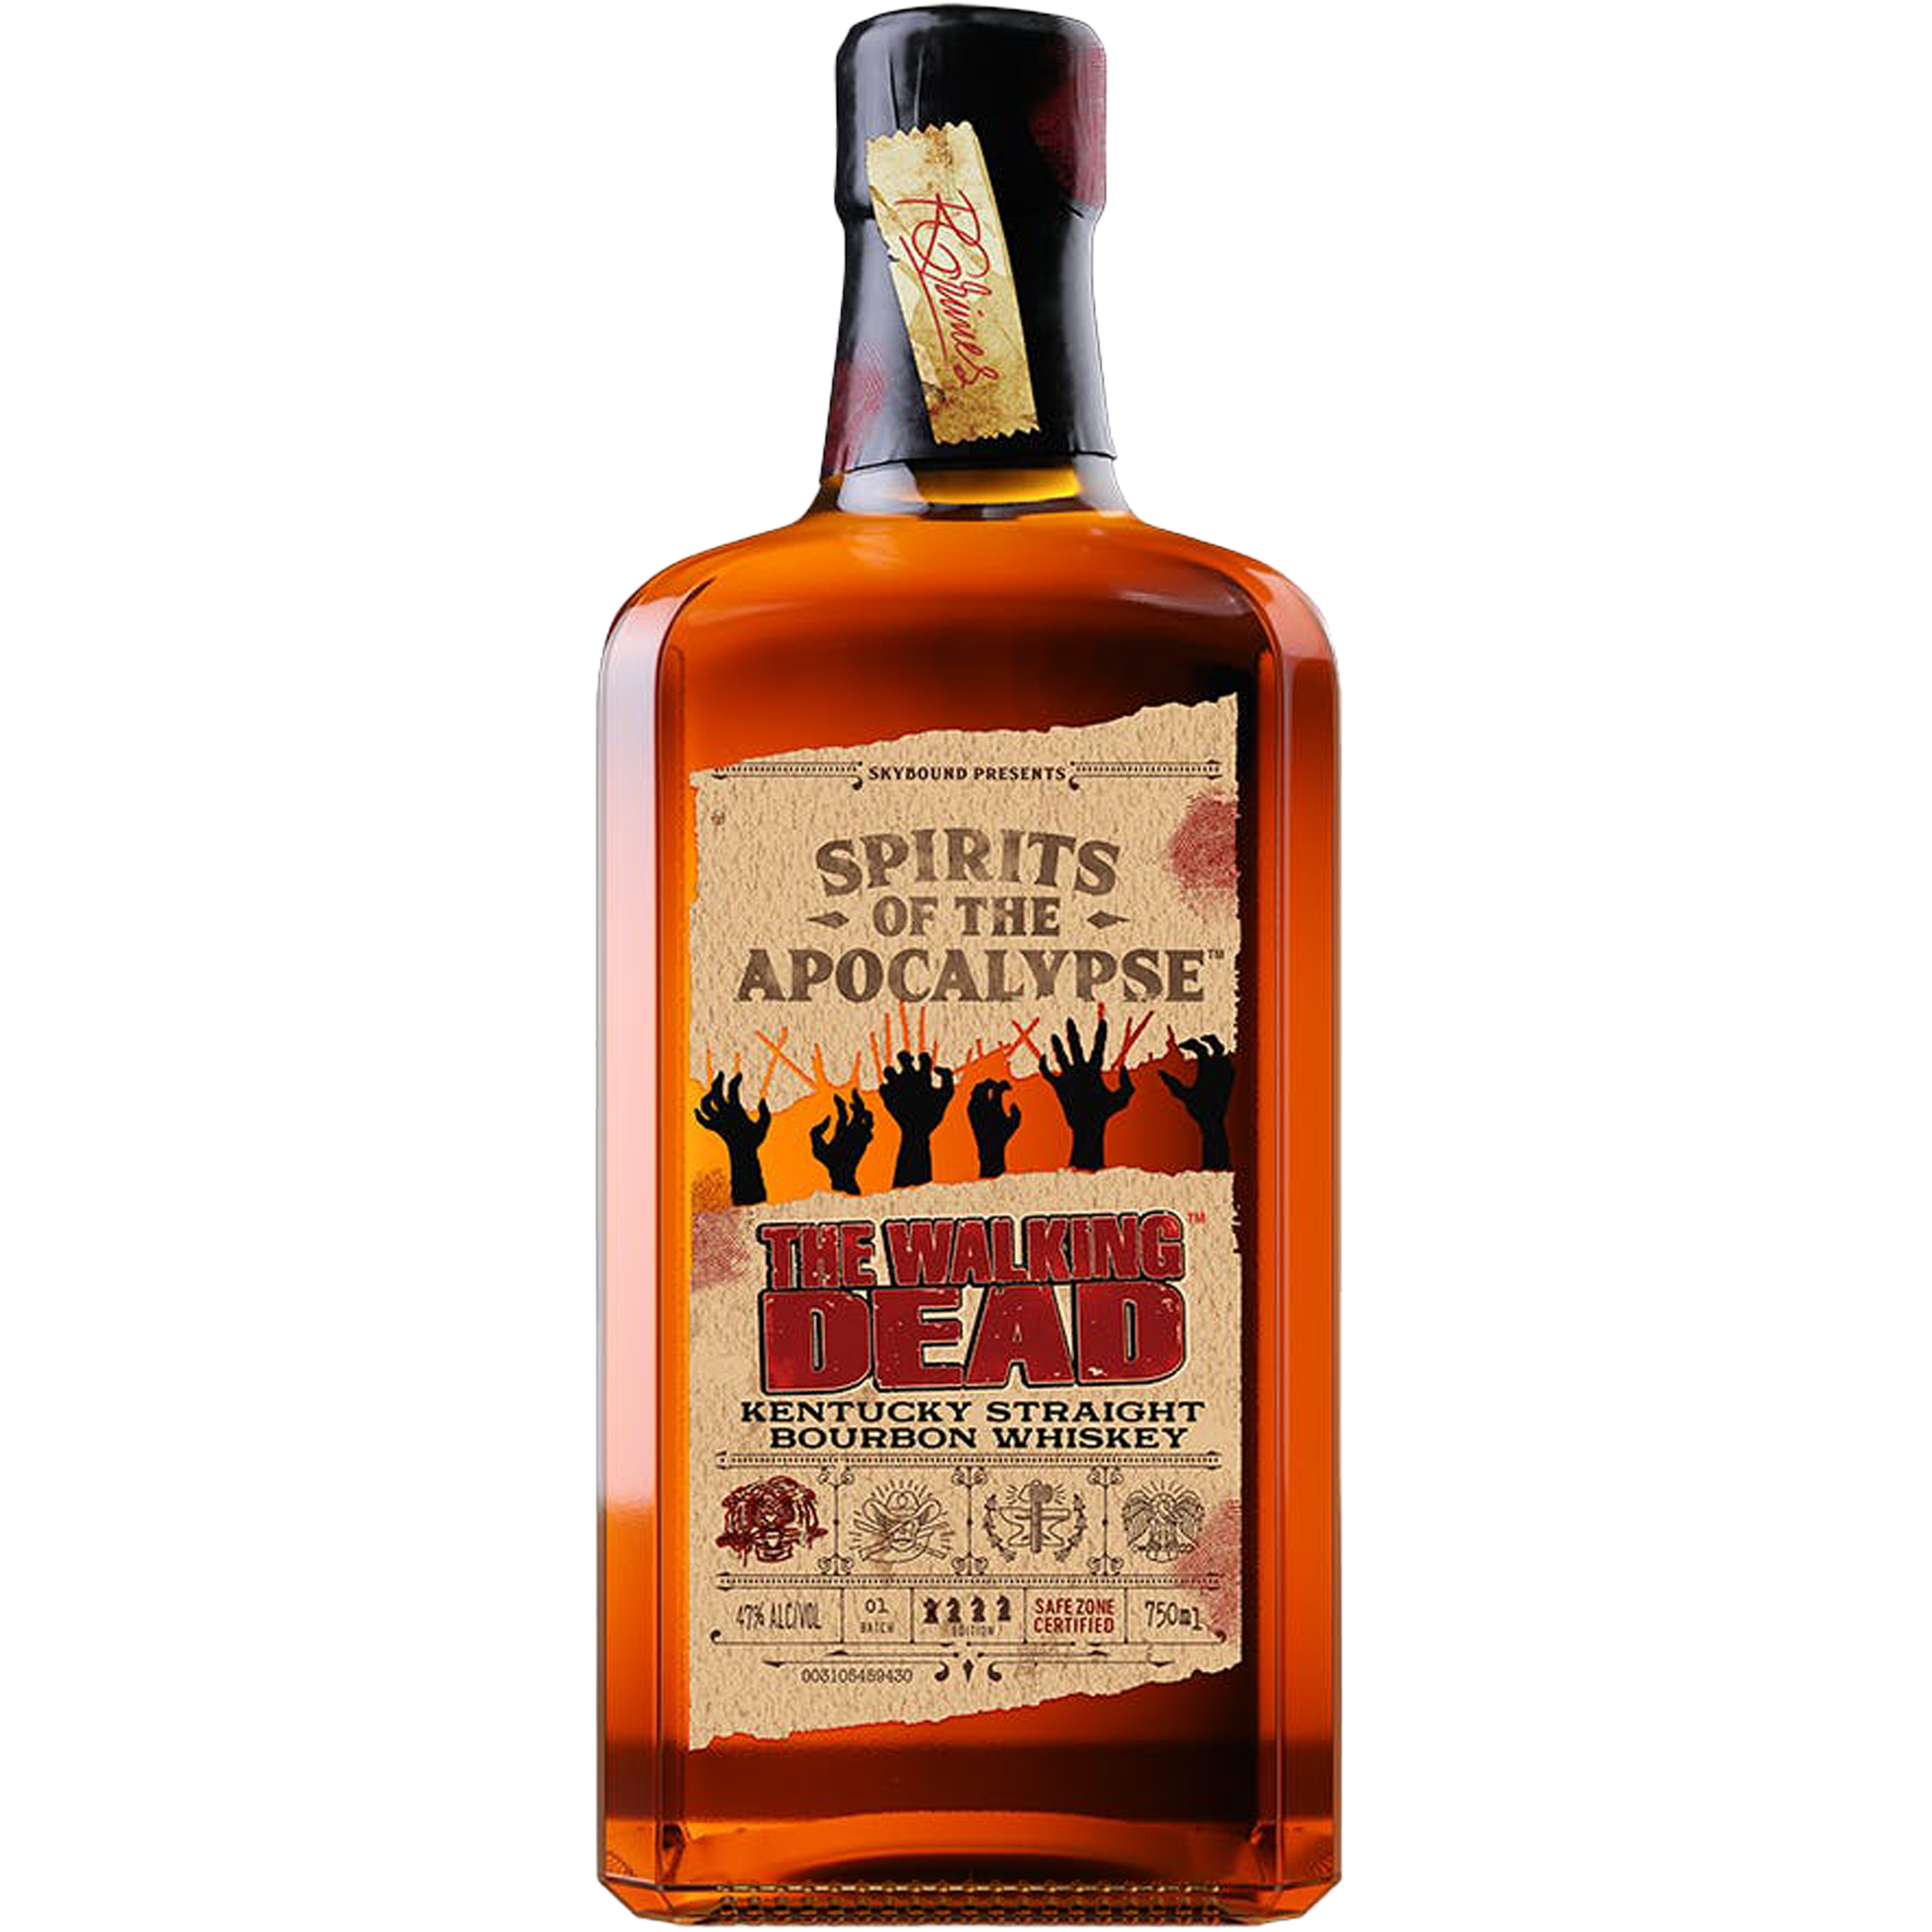 Spirits of The Apocalypse The Walking Dead Bourbon